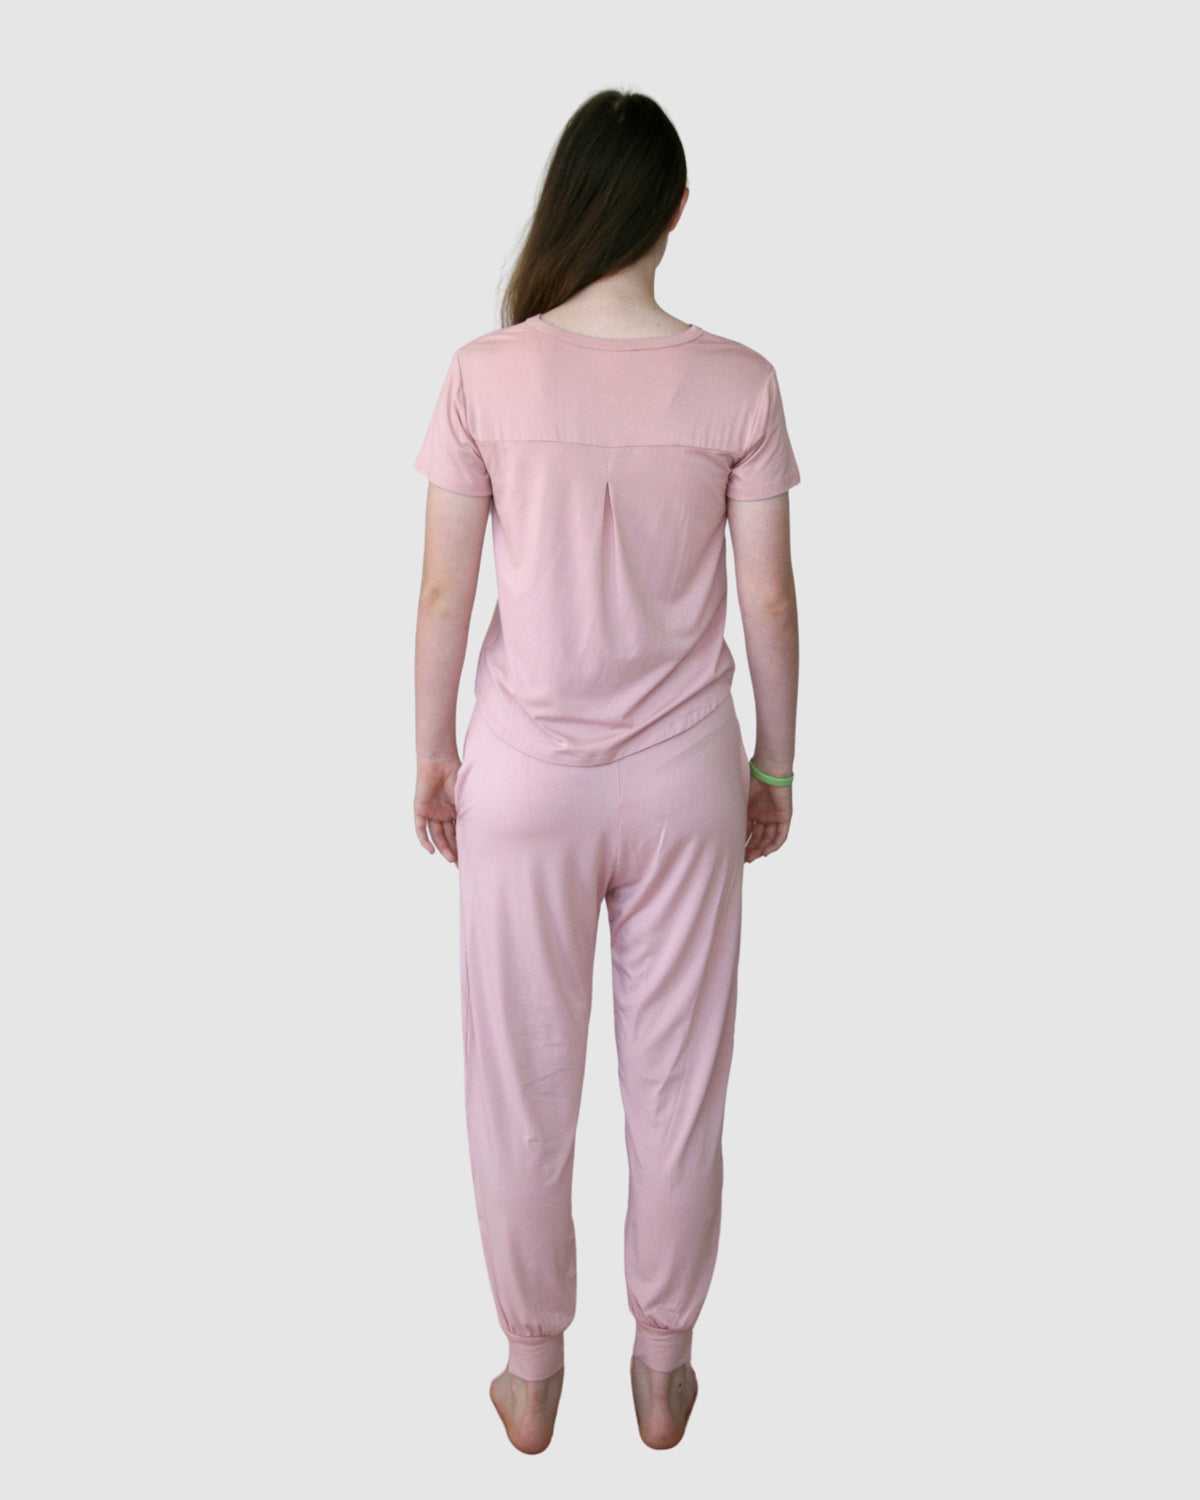 pink teen girls pyjamas set long pants and short sleeve top by Love Haidee Australia back